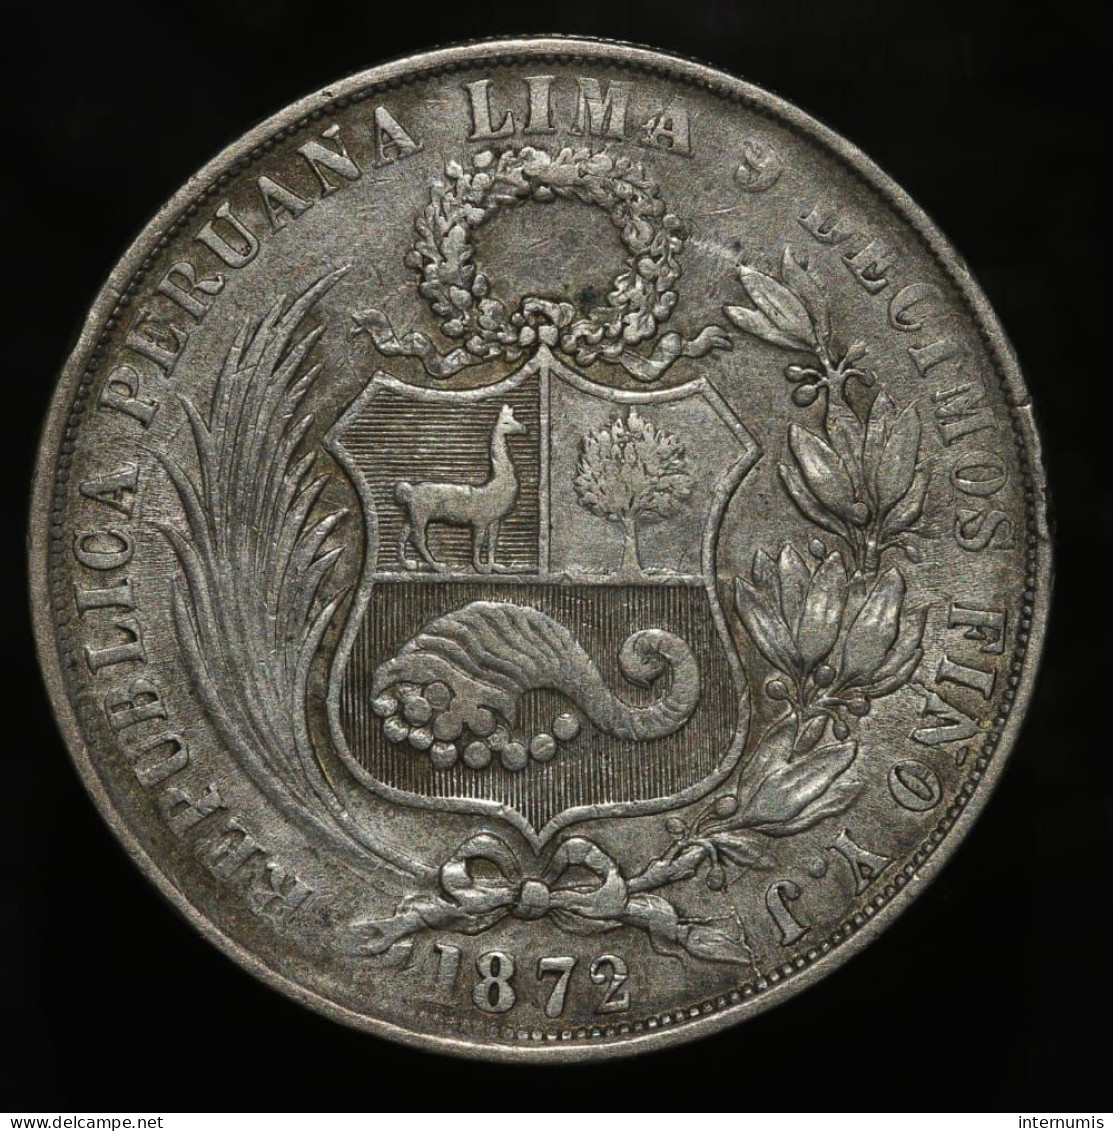 MONNAIE FAUTEE - ERROR COIN : Perou / Peru, 1 Sol, 1872, YJ  - Lima, Argent (Silver), TTB (EF), KM#196.3 - Peru